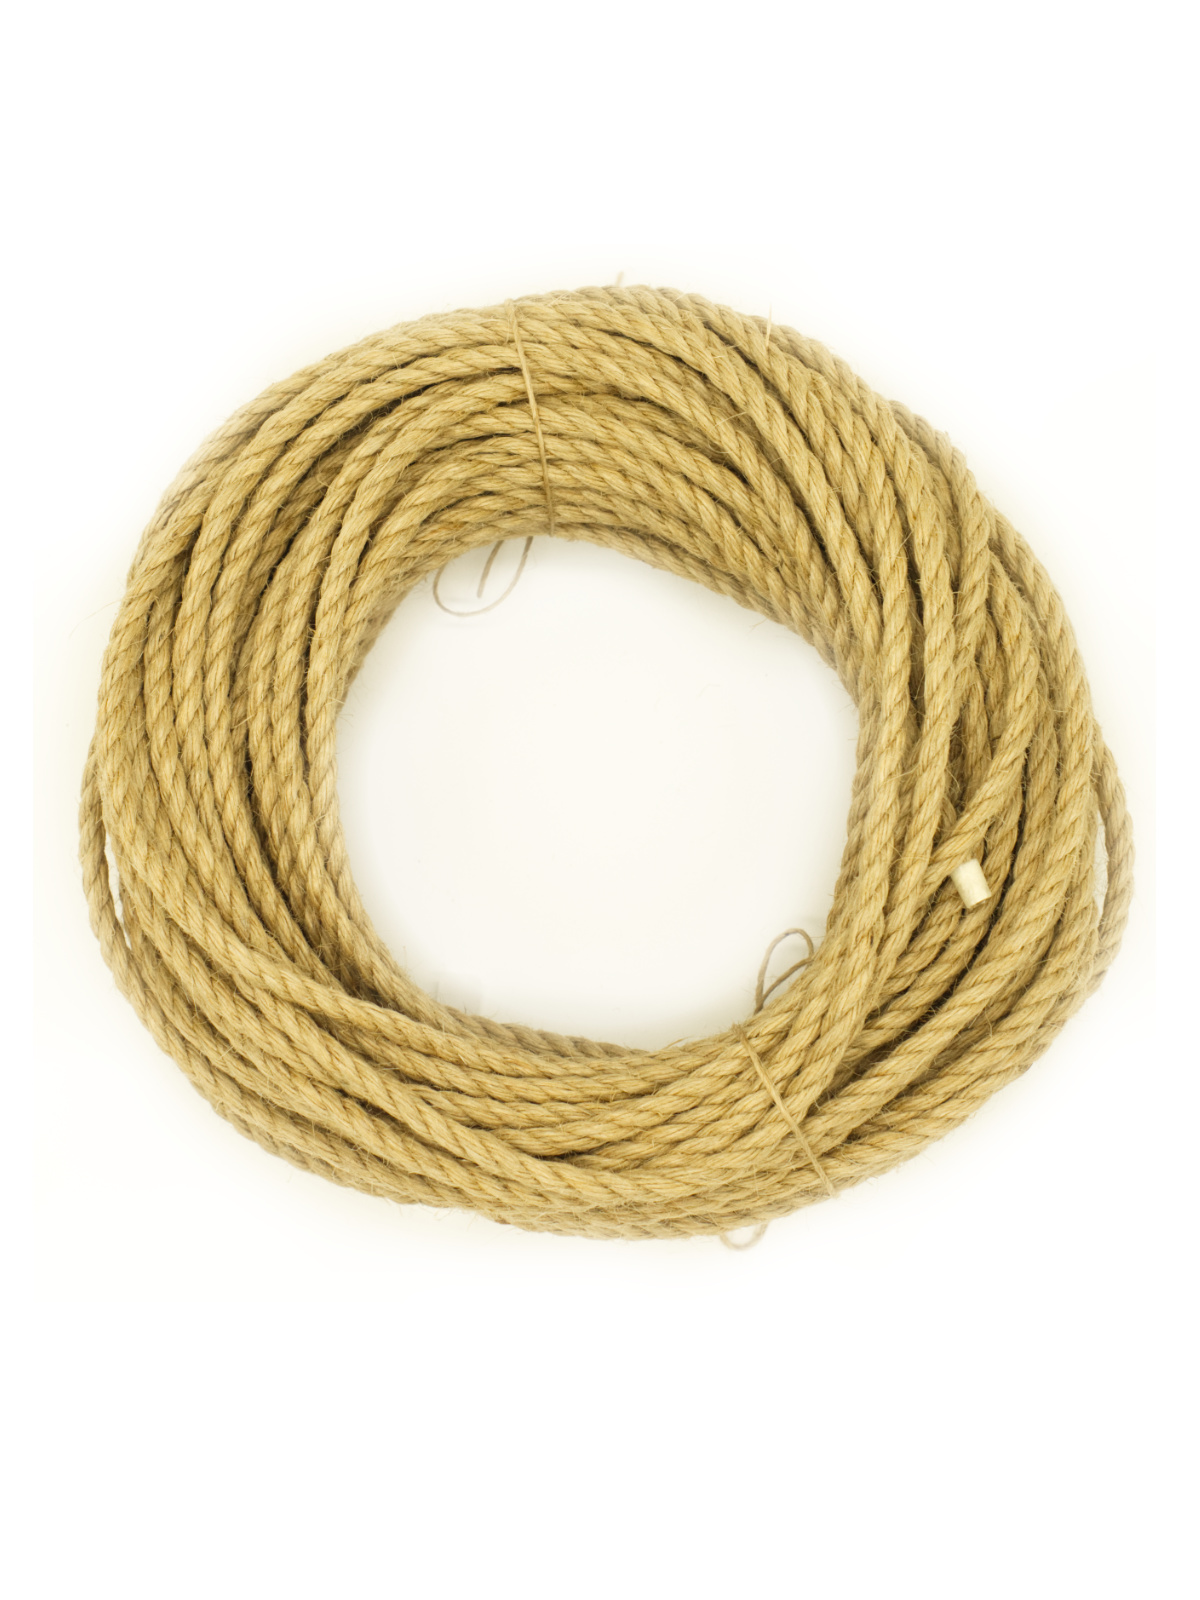 25m, ∅ 5.5mm raw jute rope, AMATSUNAWA 30, JBO-free, for DIY processing